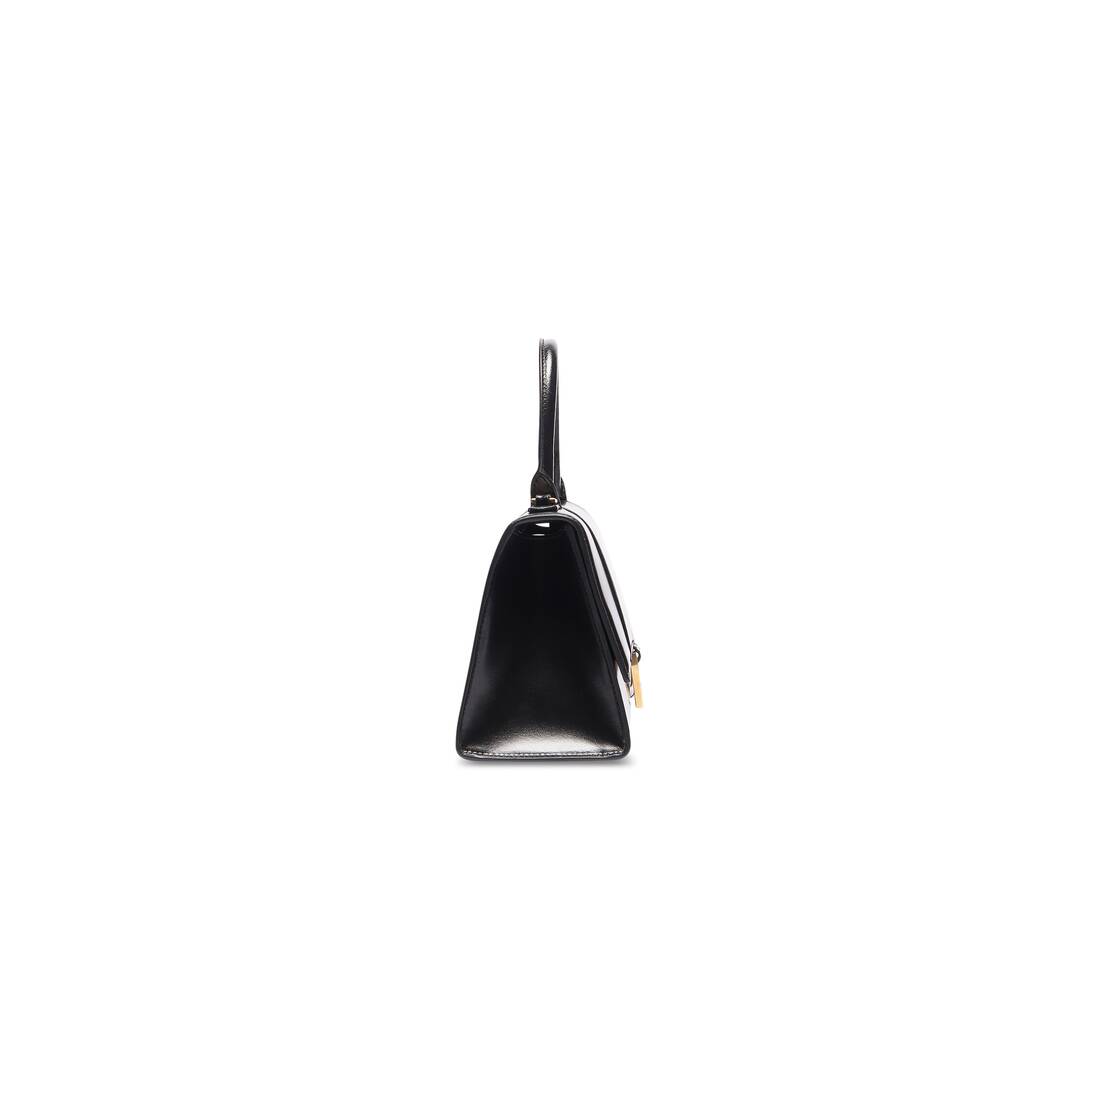 Hourglass Small Handbag in black shiny box calfskin